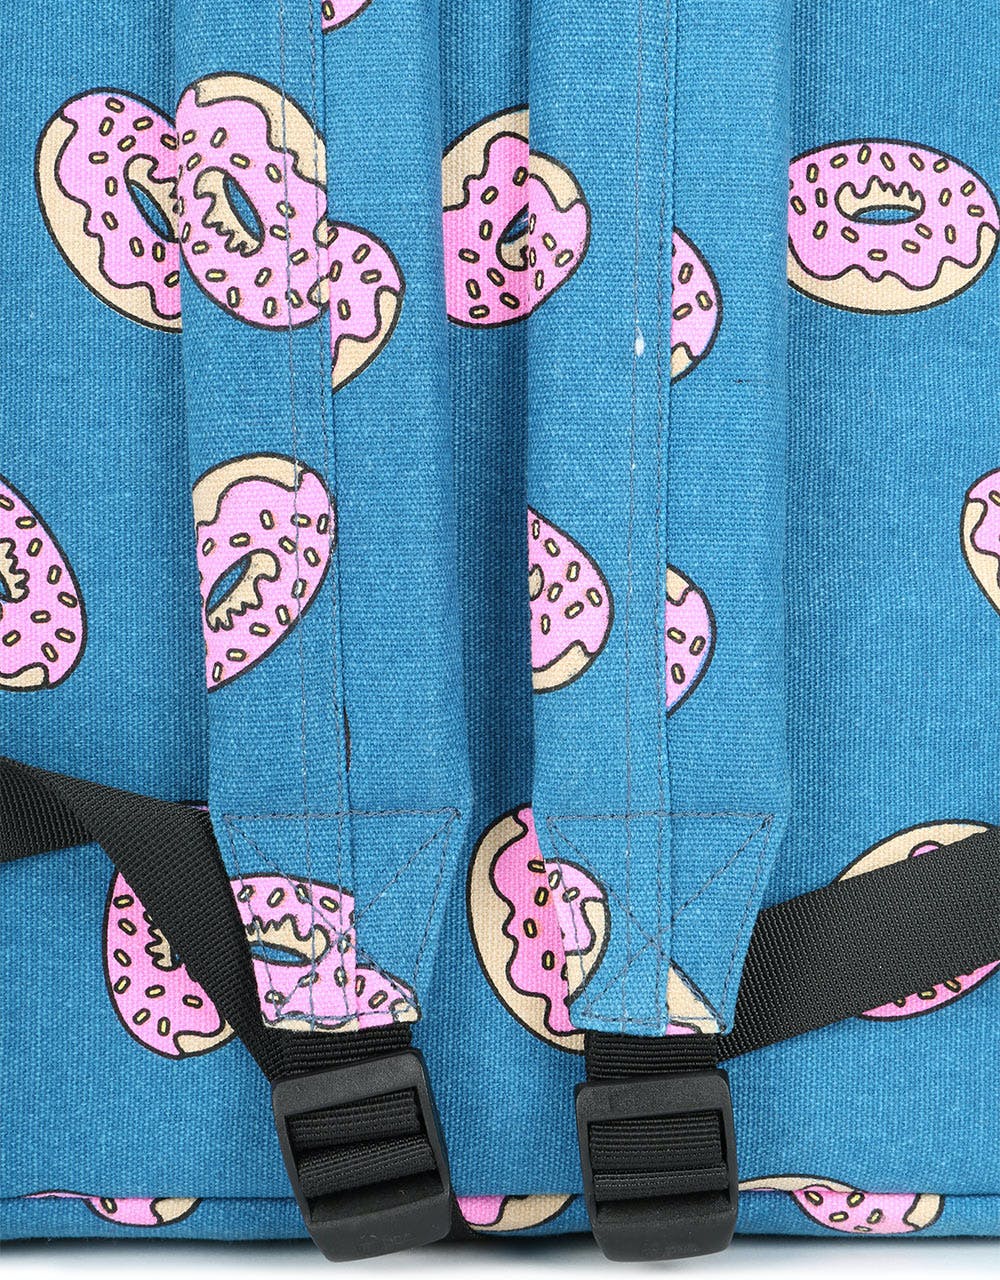 Mi-Pac Doughnut Backpack - Navy